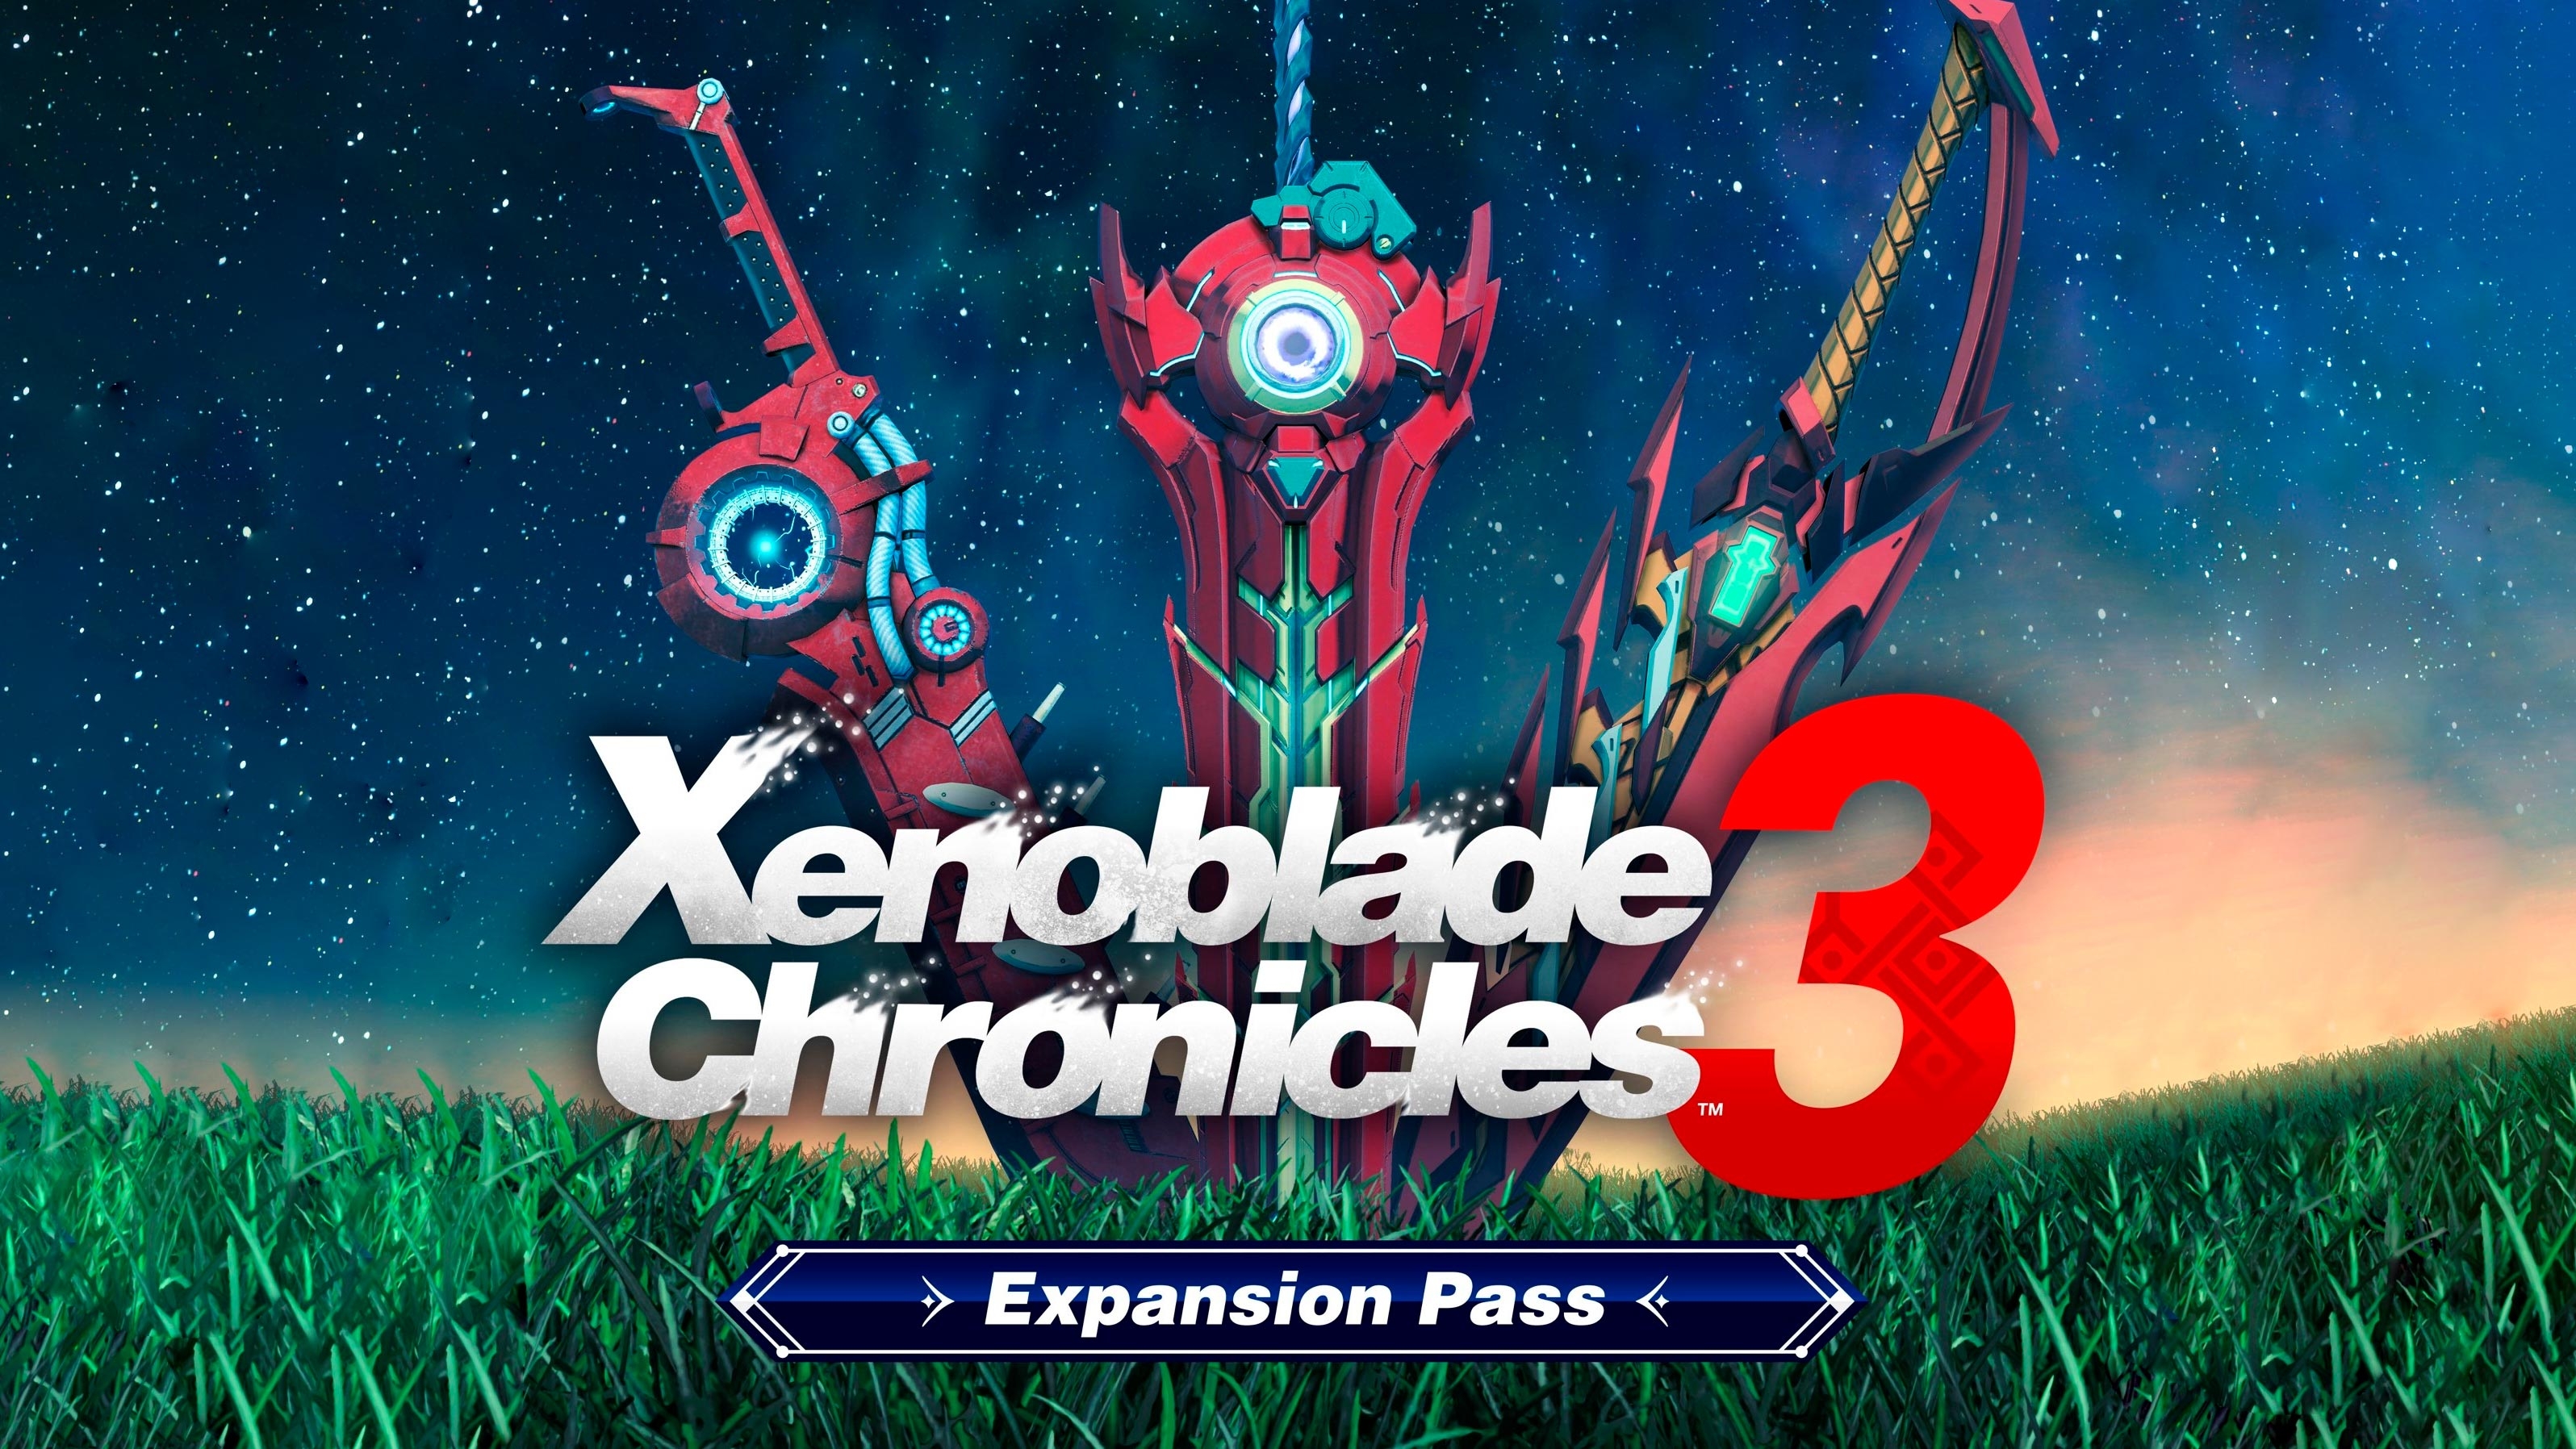 Nintendo Expansion Pass 3 Xenoblade Switch Chronicles Eshop Buy